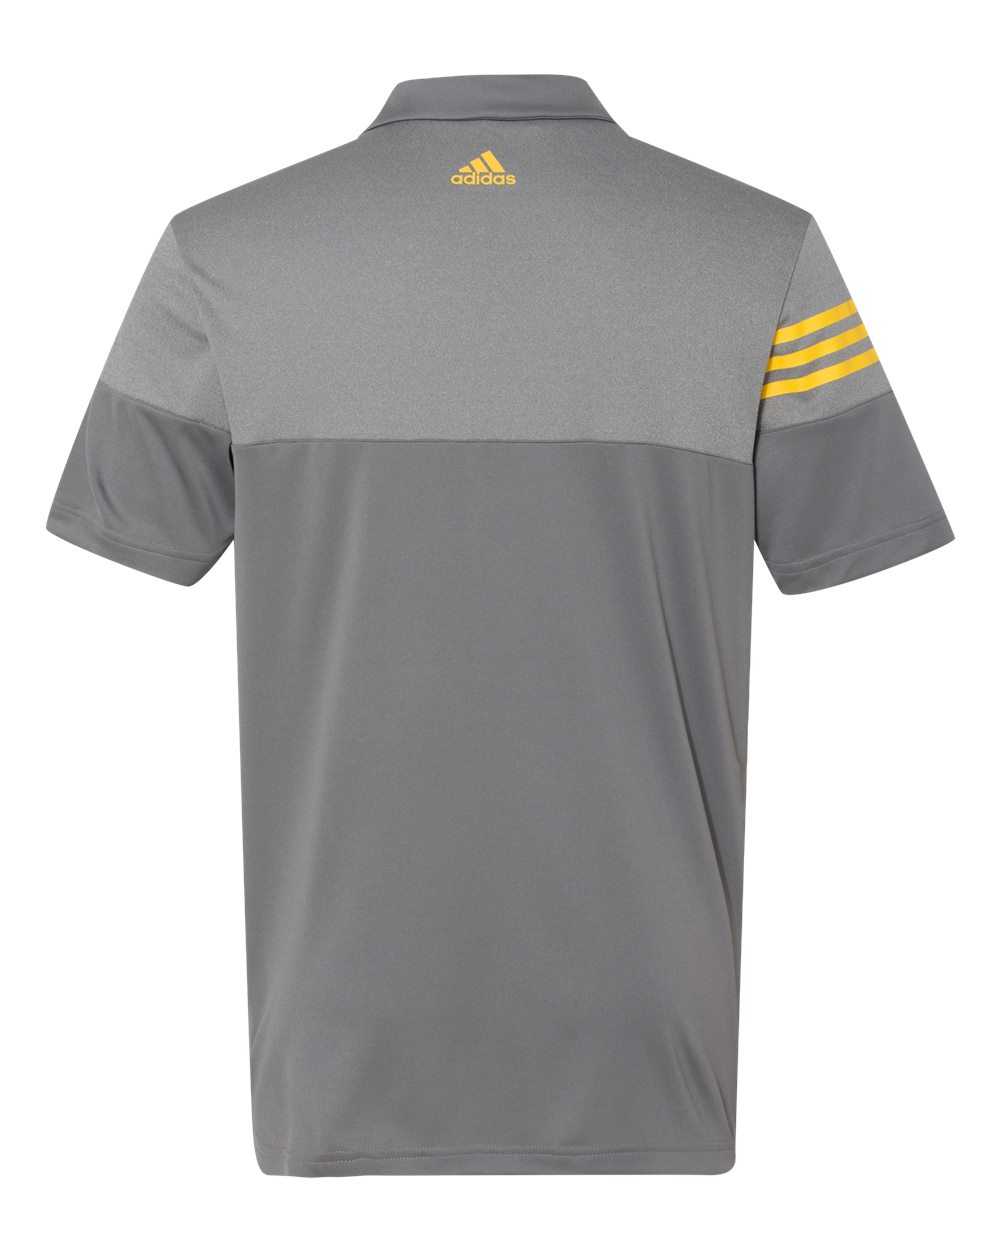 Adidas A213 Heathered 3-Stripes Block Sport Shirt - Vista Grey EQT Yellow - HIT a Double